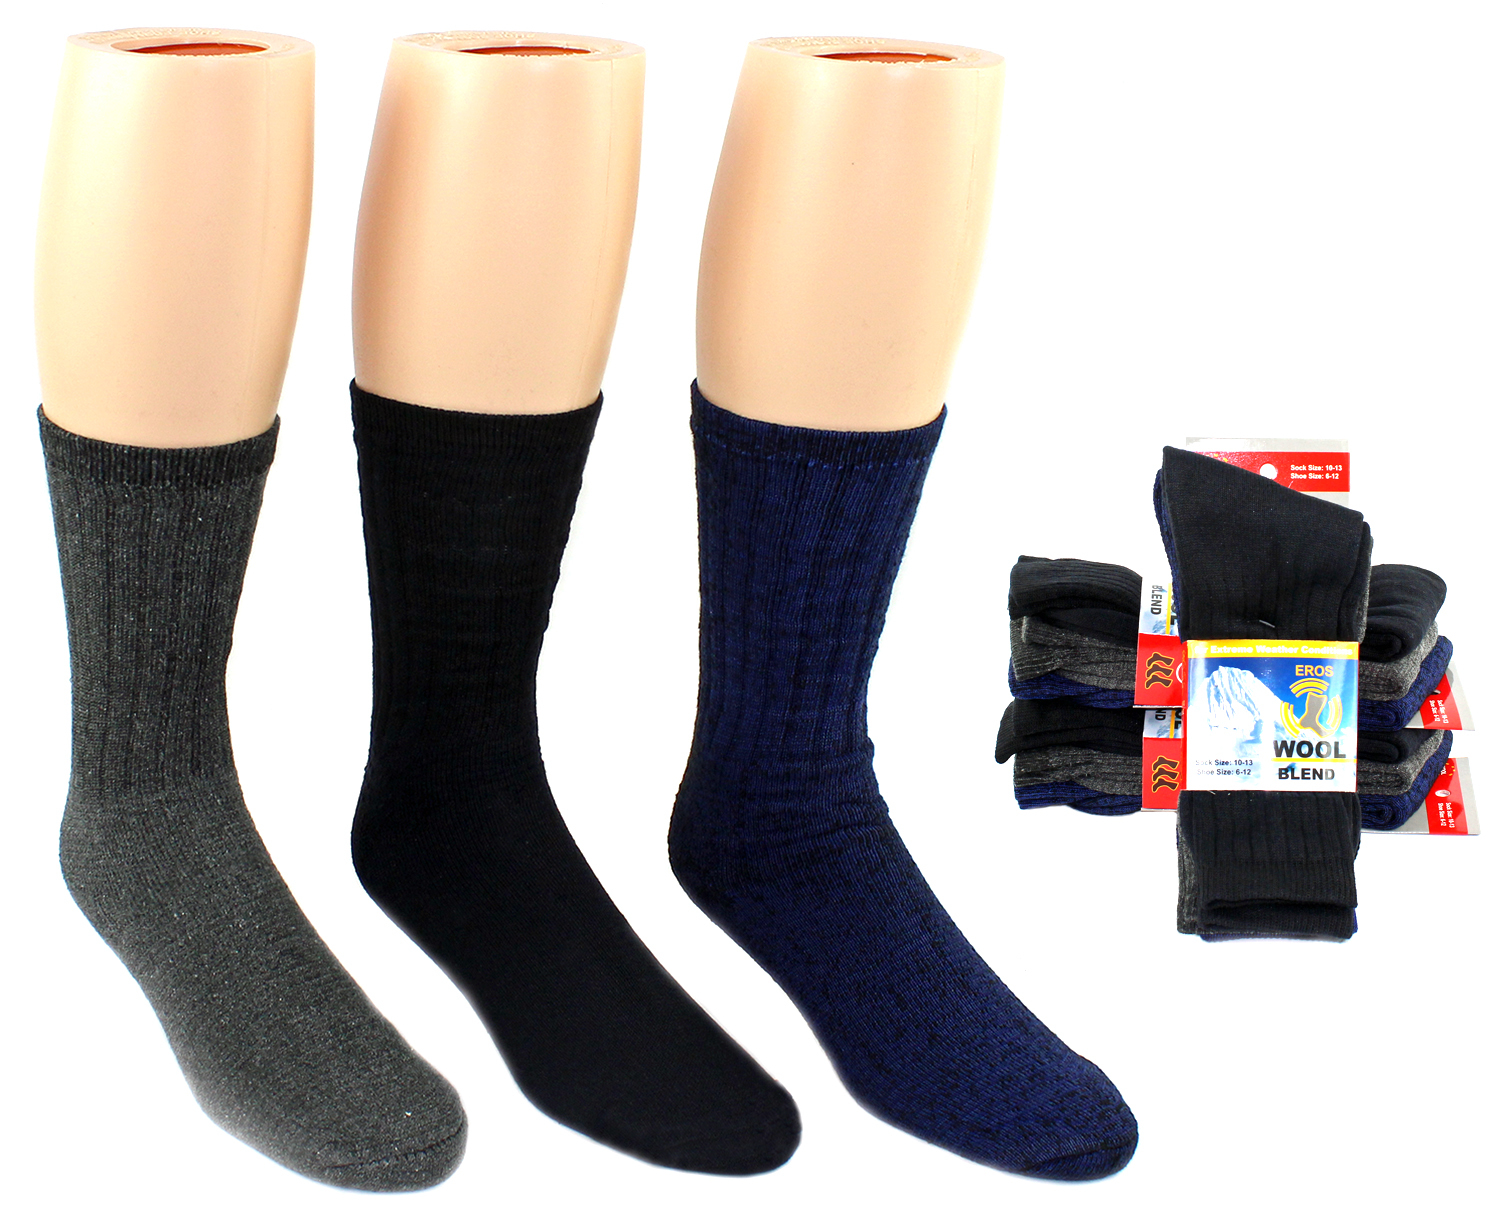 Bulk Men's Wool Thermal Crew Socks - Black & Grey, 3 Pack, Size 10-13